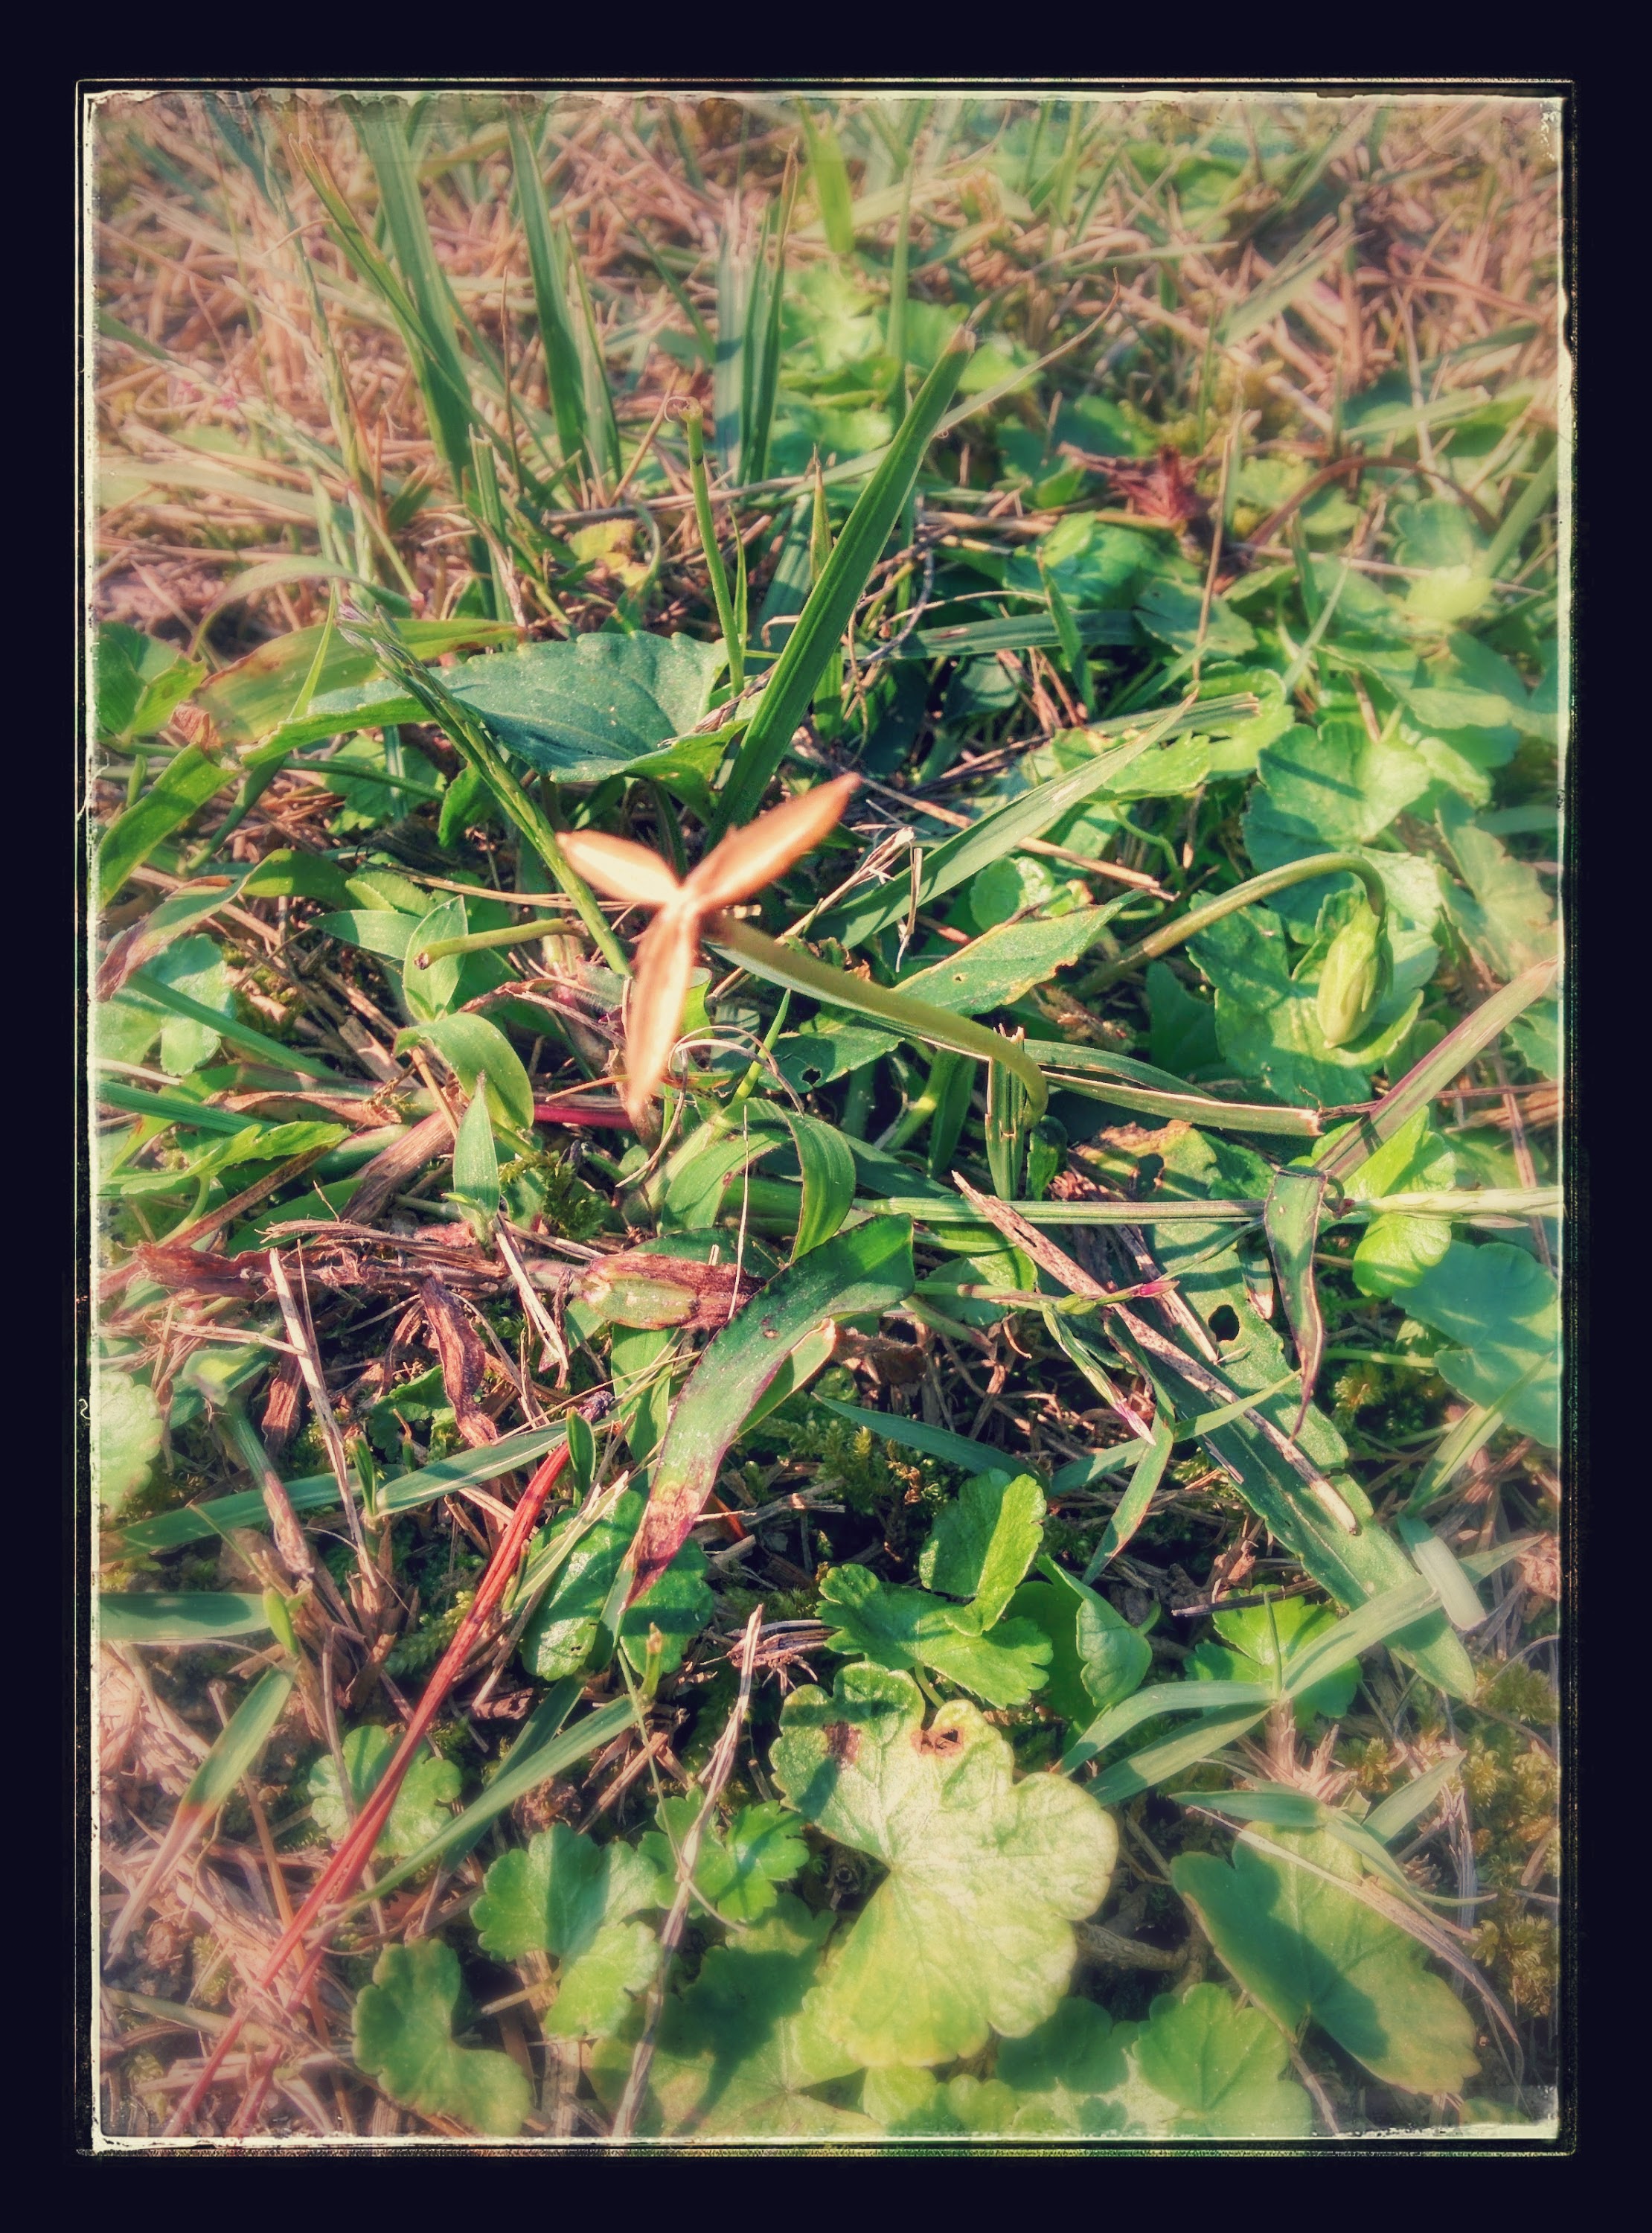 IMG_20151029_122427-EFFECTS.jpg 잔디밭 바닥에서 얕게 잎이 자라는 들풀... 땅에 붙어 자라는 피막이